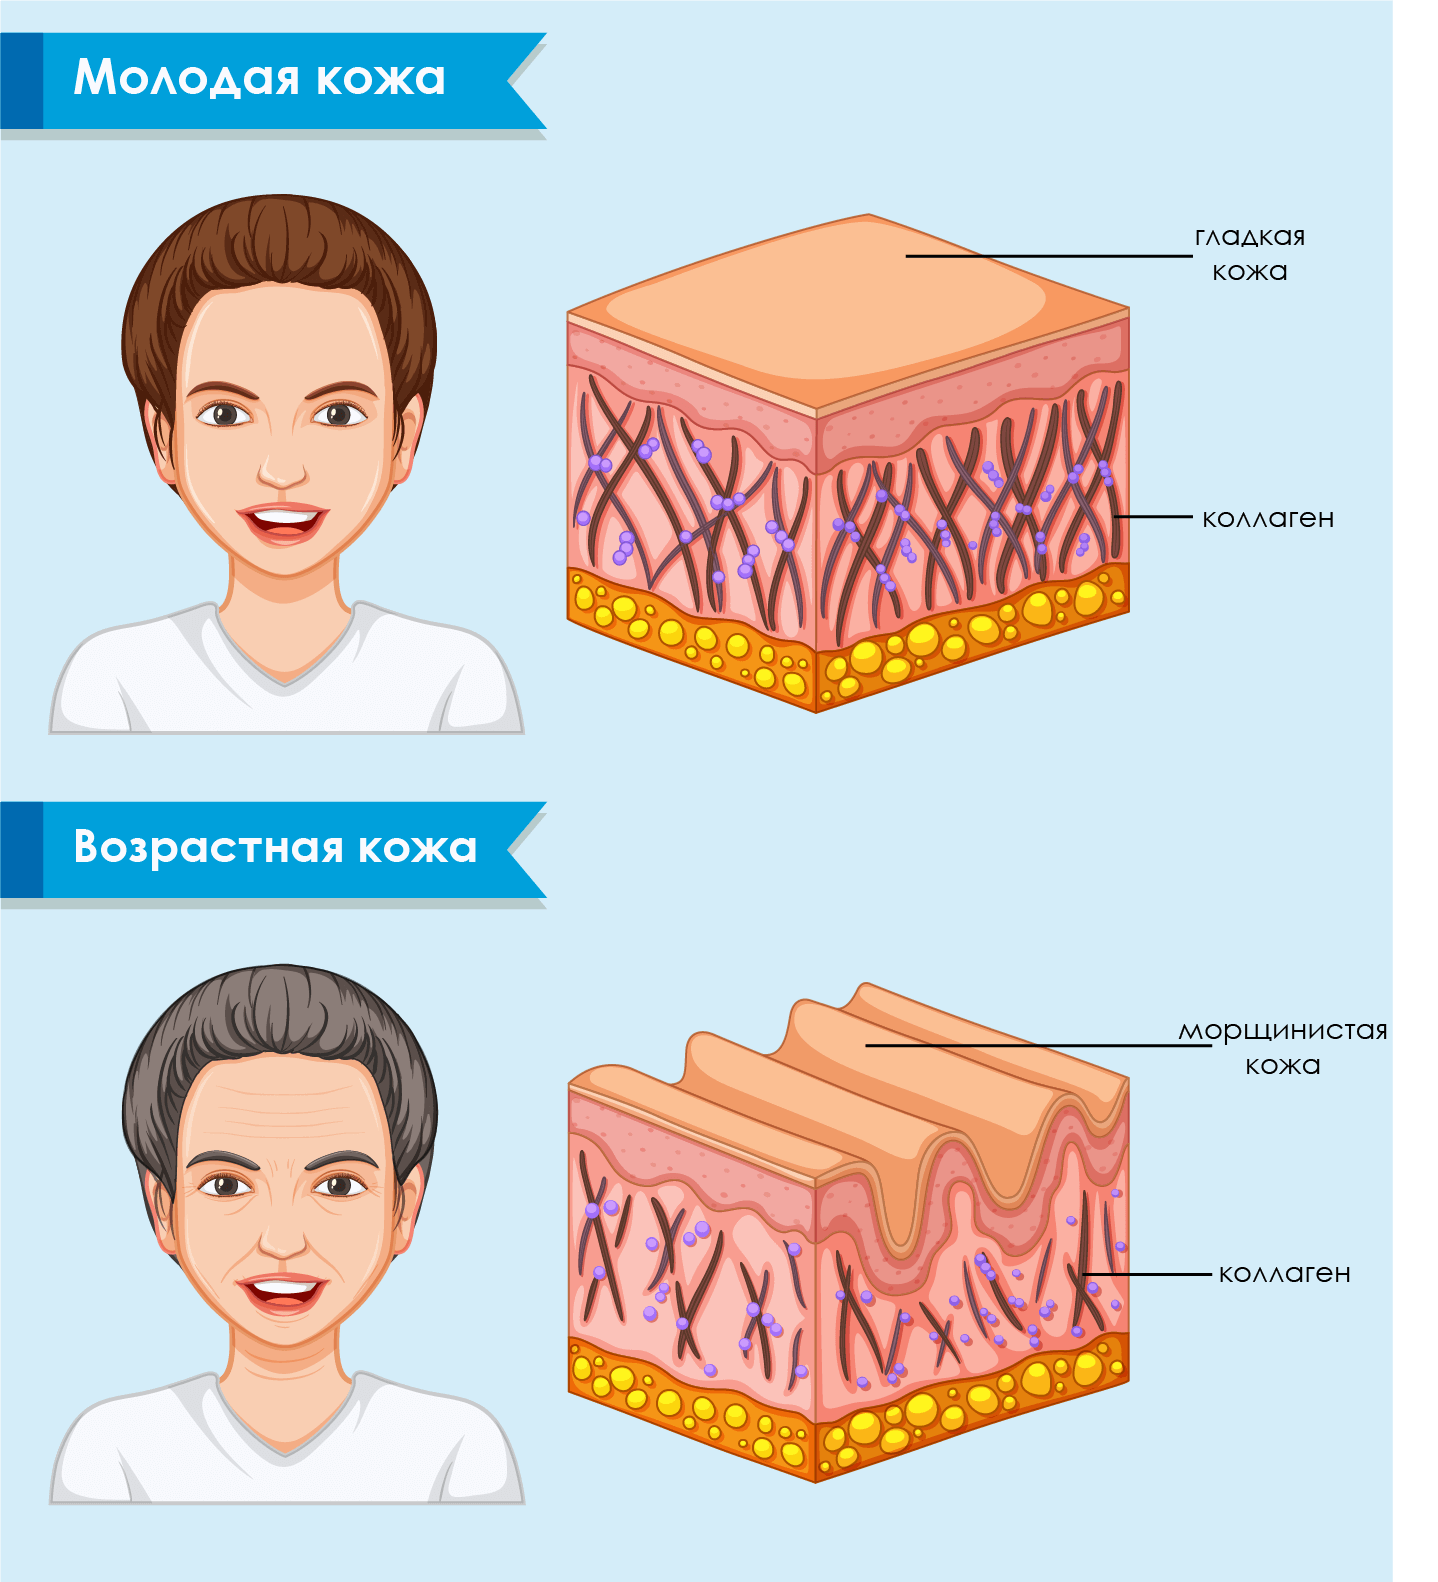 Инфографика по старению кожи